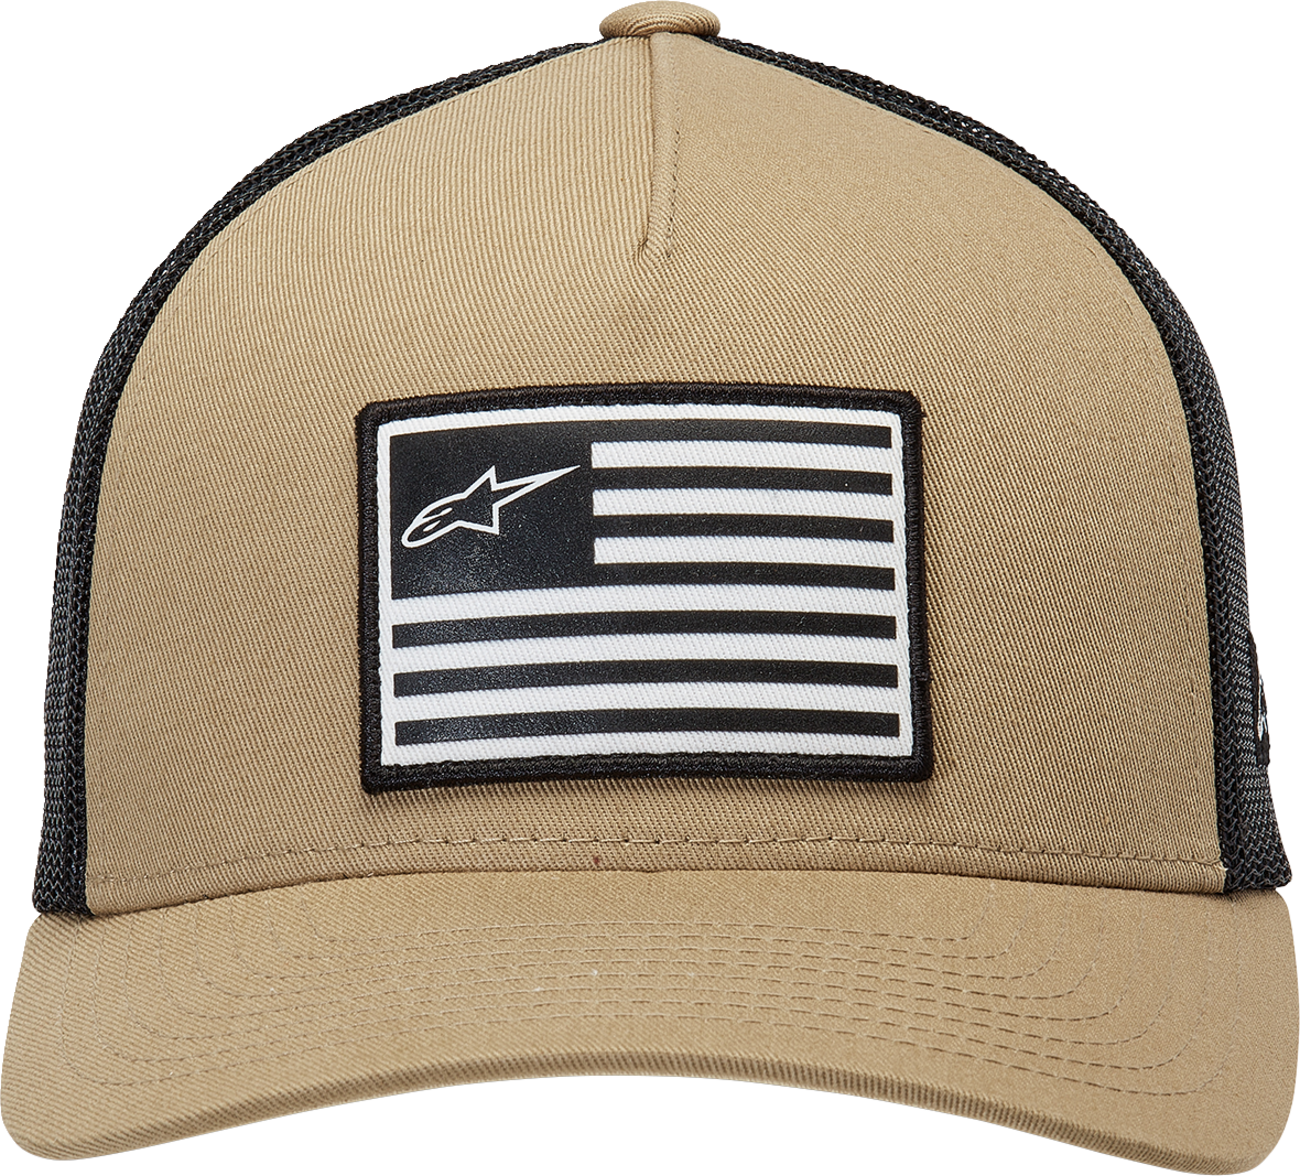 ALPINESTARS Flag Snapback Hat - Sand/Black - One Size 1211810132310OS